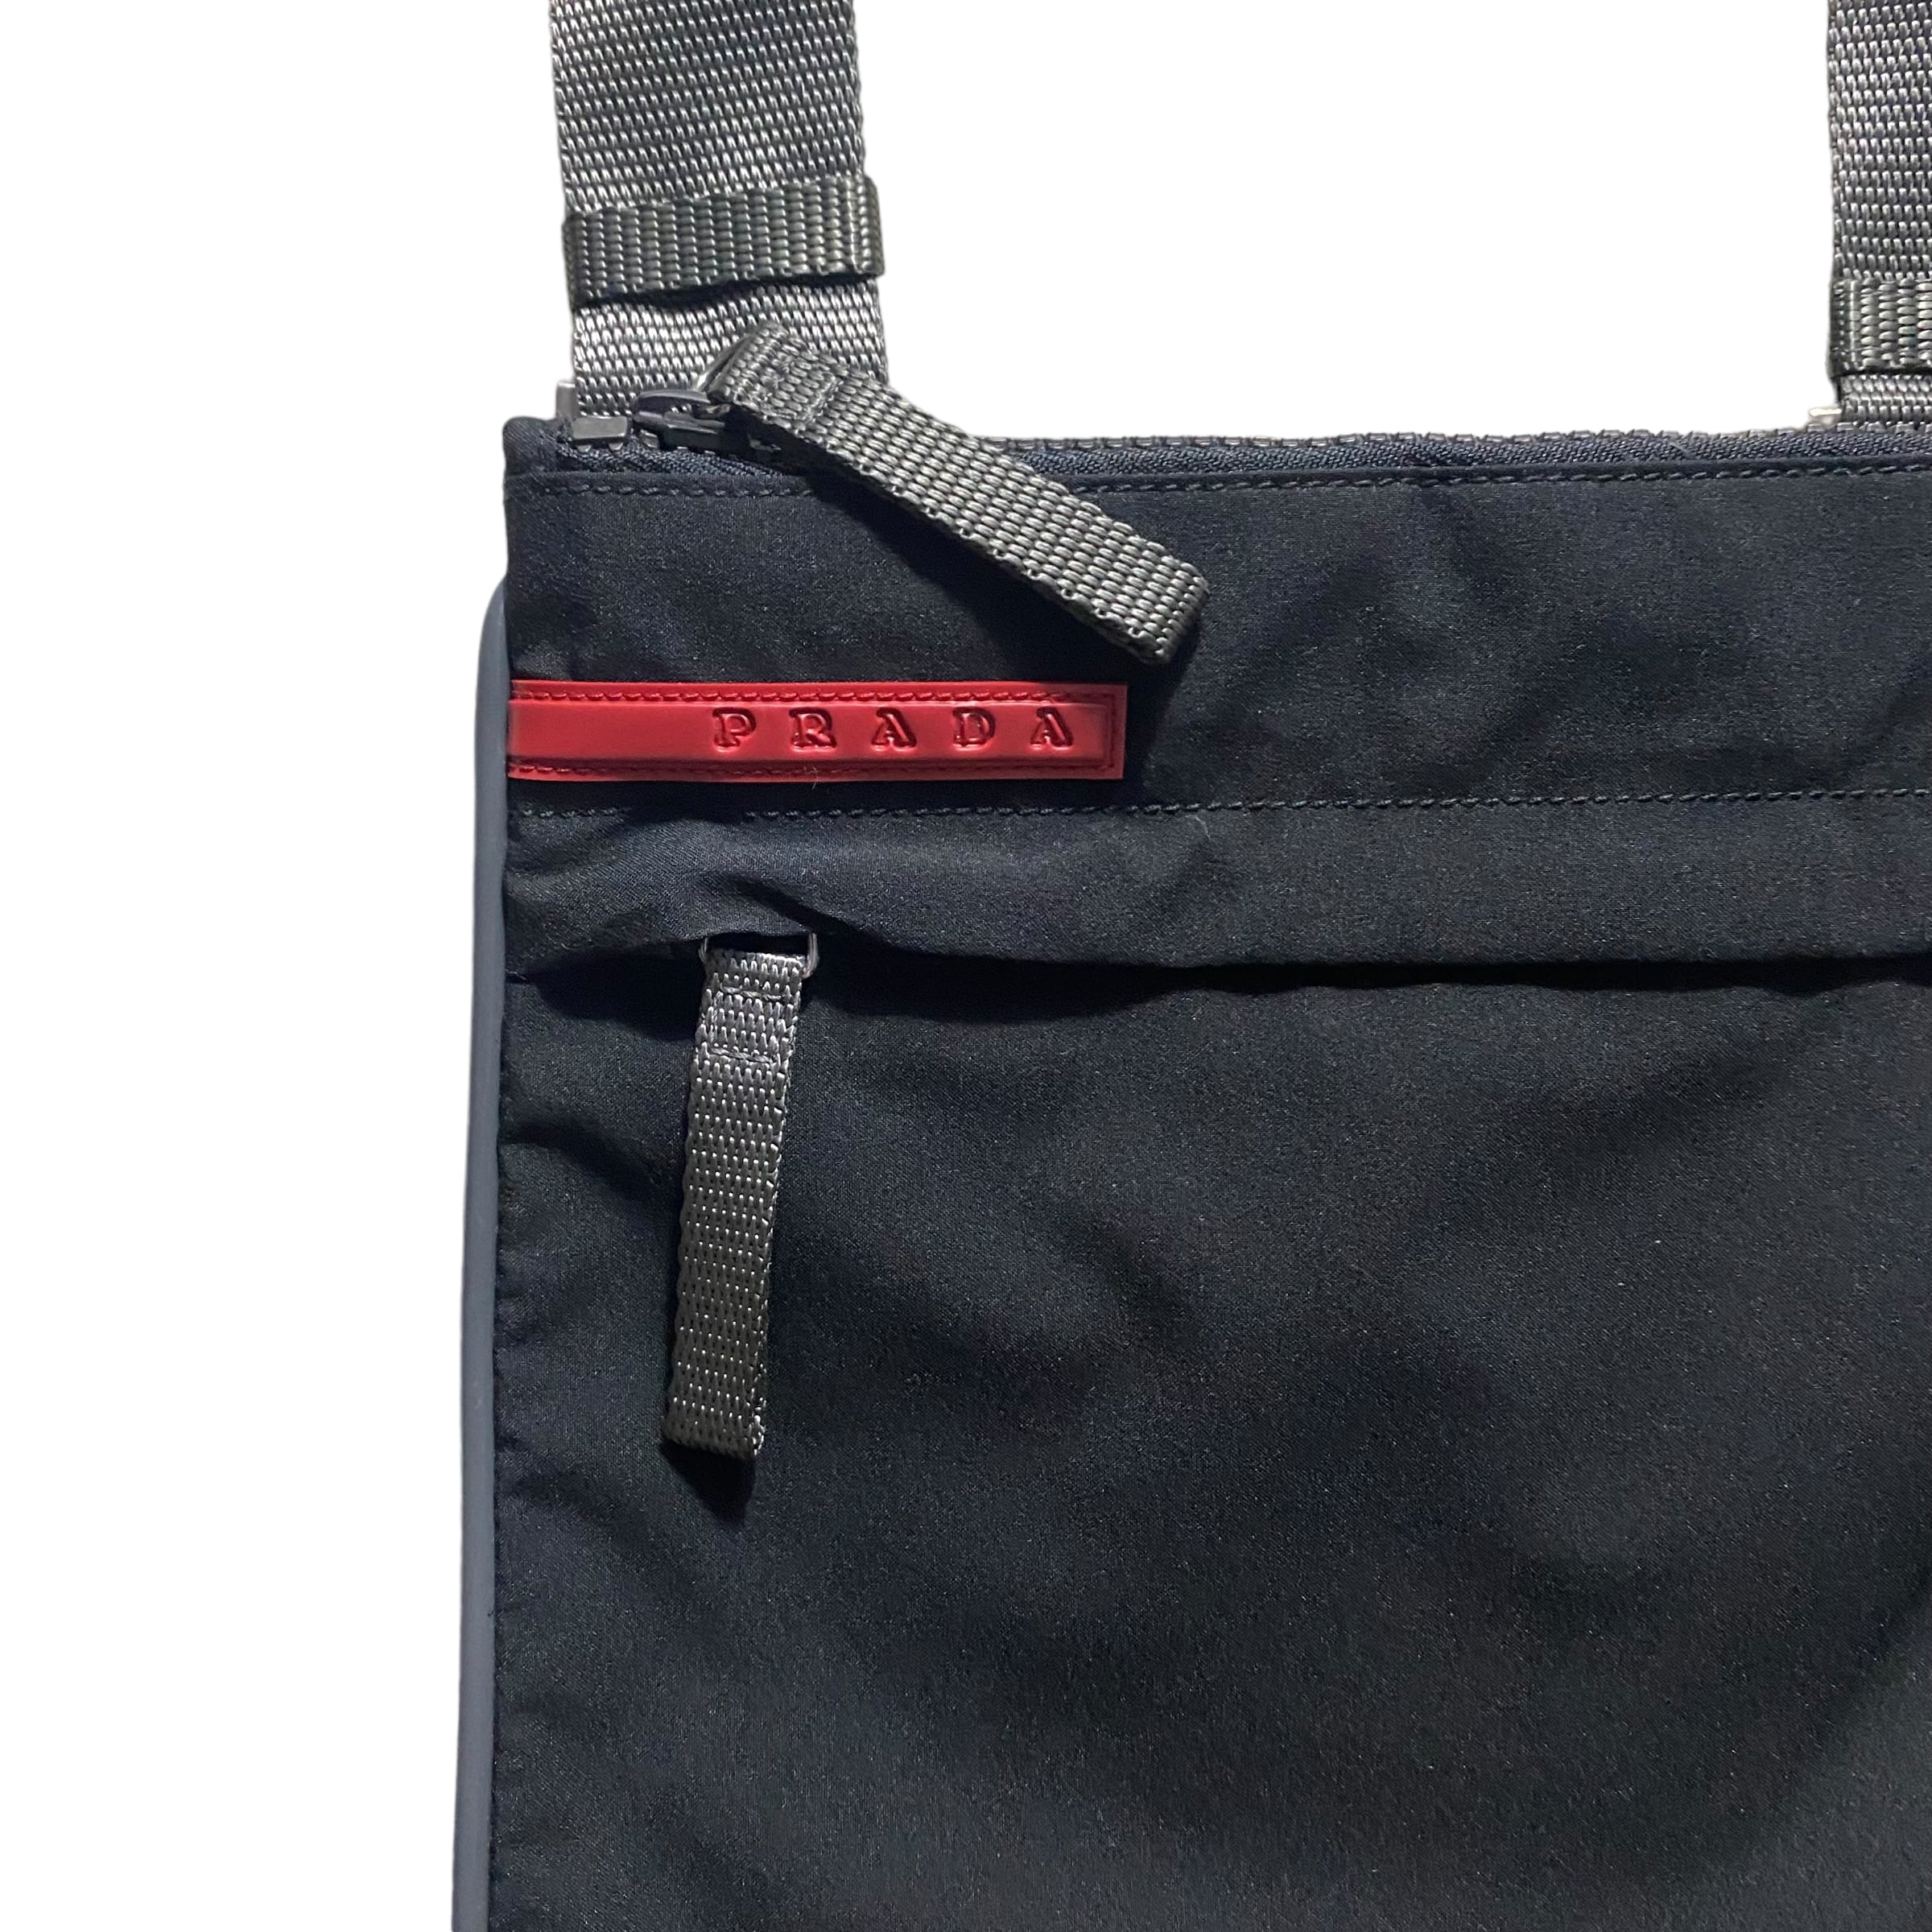 PRADA SPORT black nylon shoulder bag | NOIR ONLINE